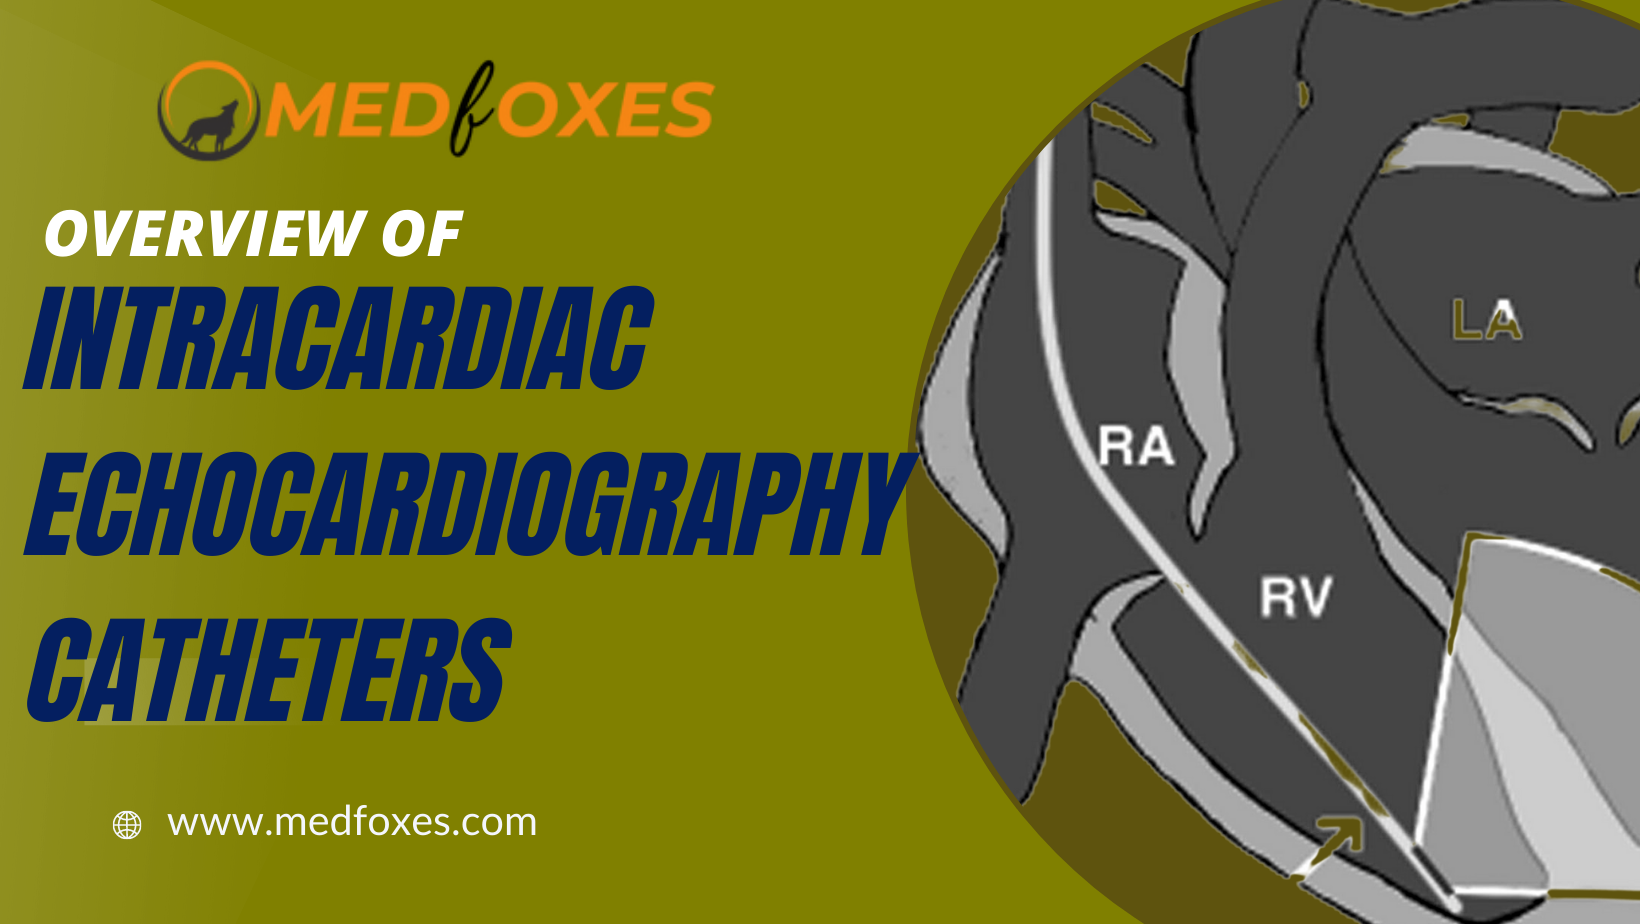 Intracardiac Echocardiography Catheters